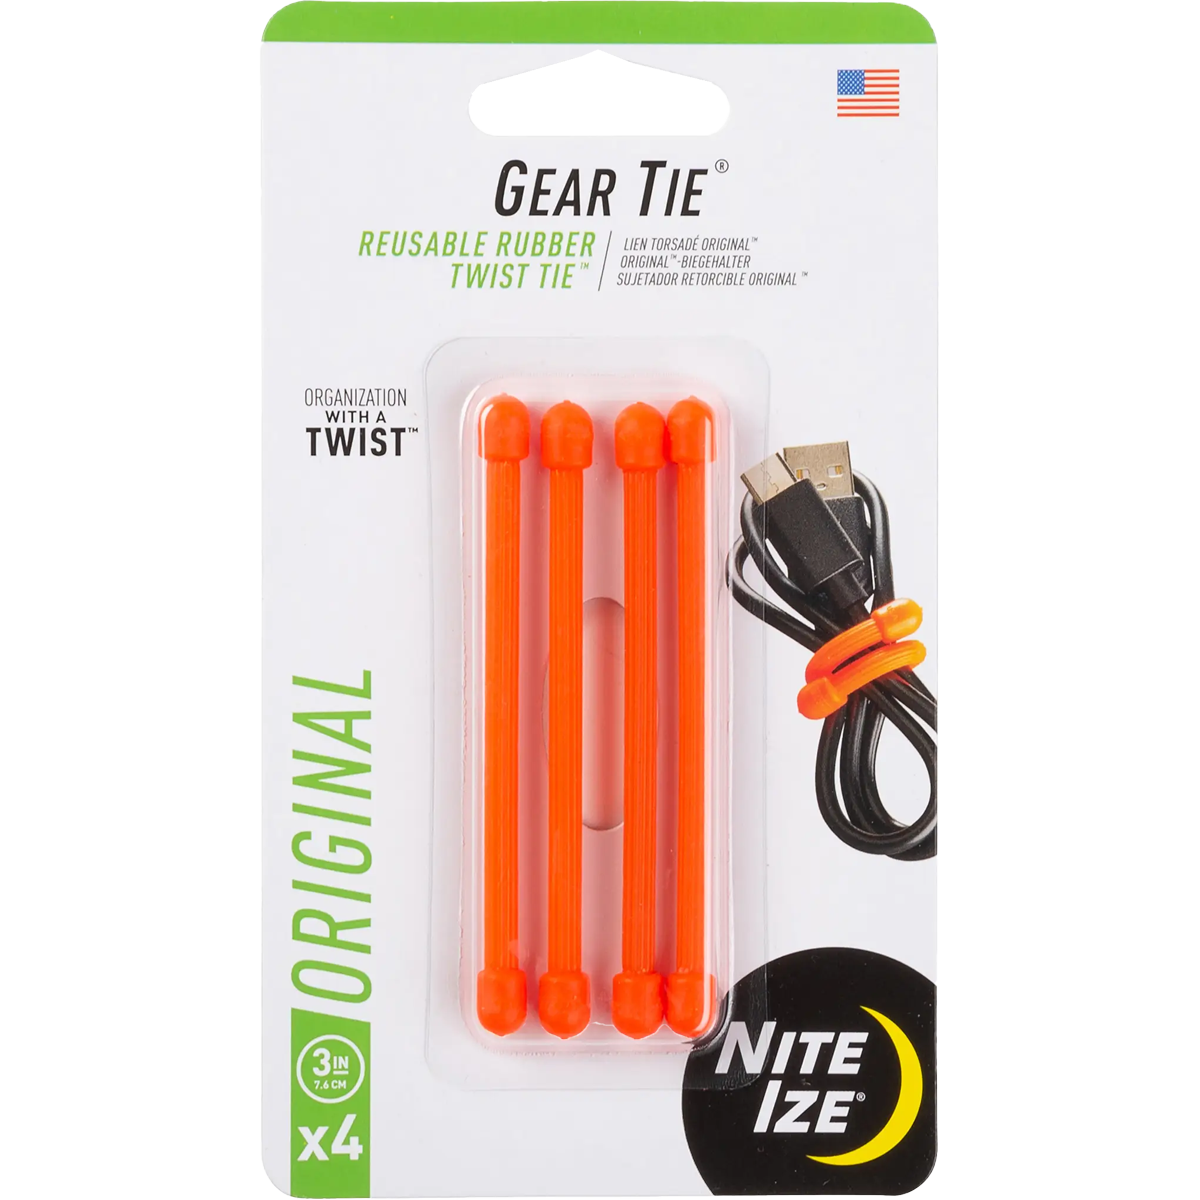 Gear Tie Reusable Rubber Twist Tie 3